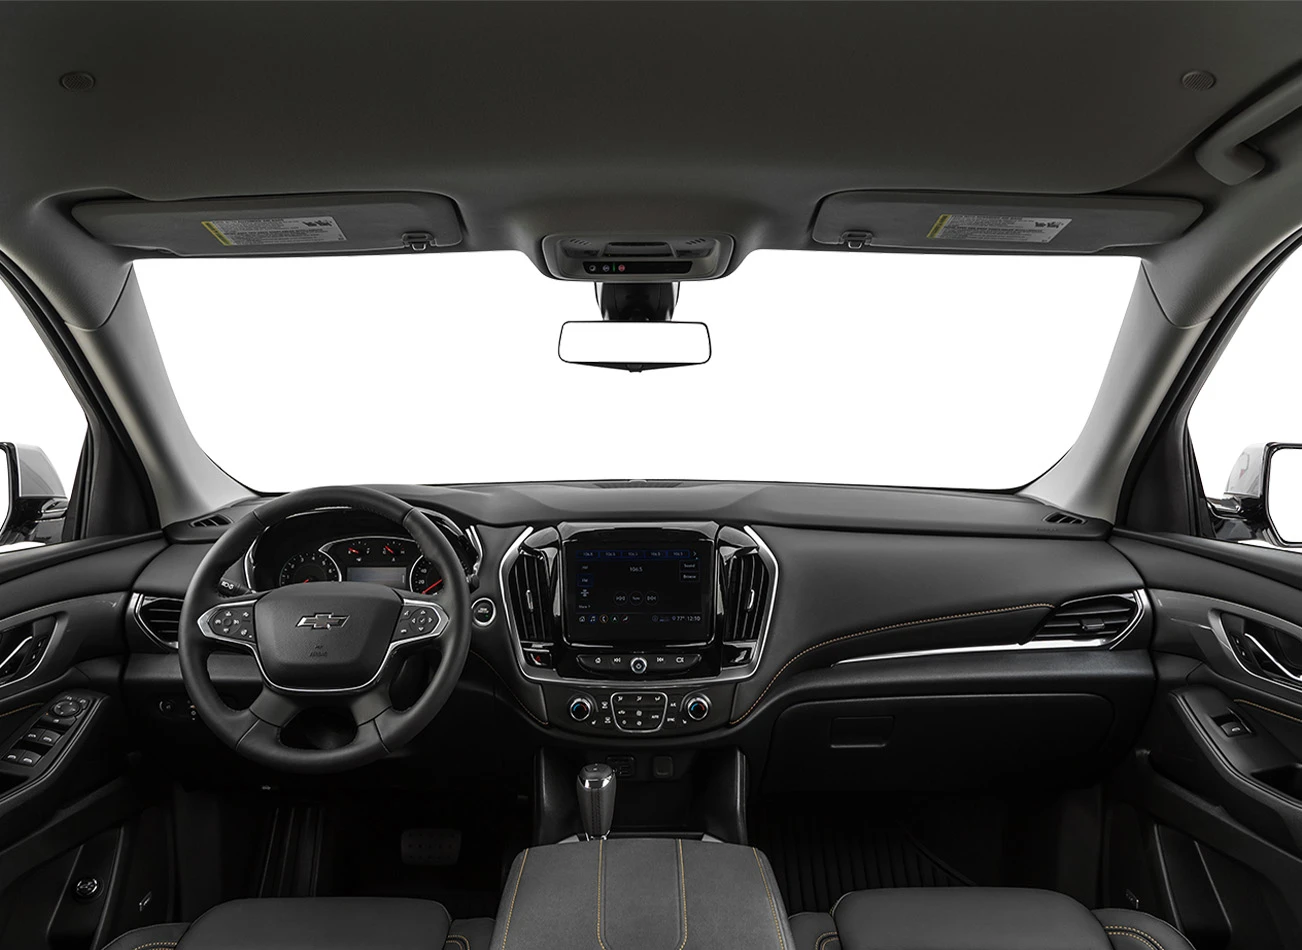 2020 Chevrolet Traverse: Interior dashboard view| CarMax